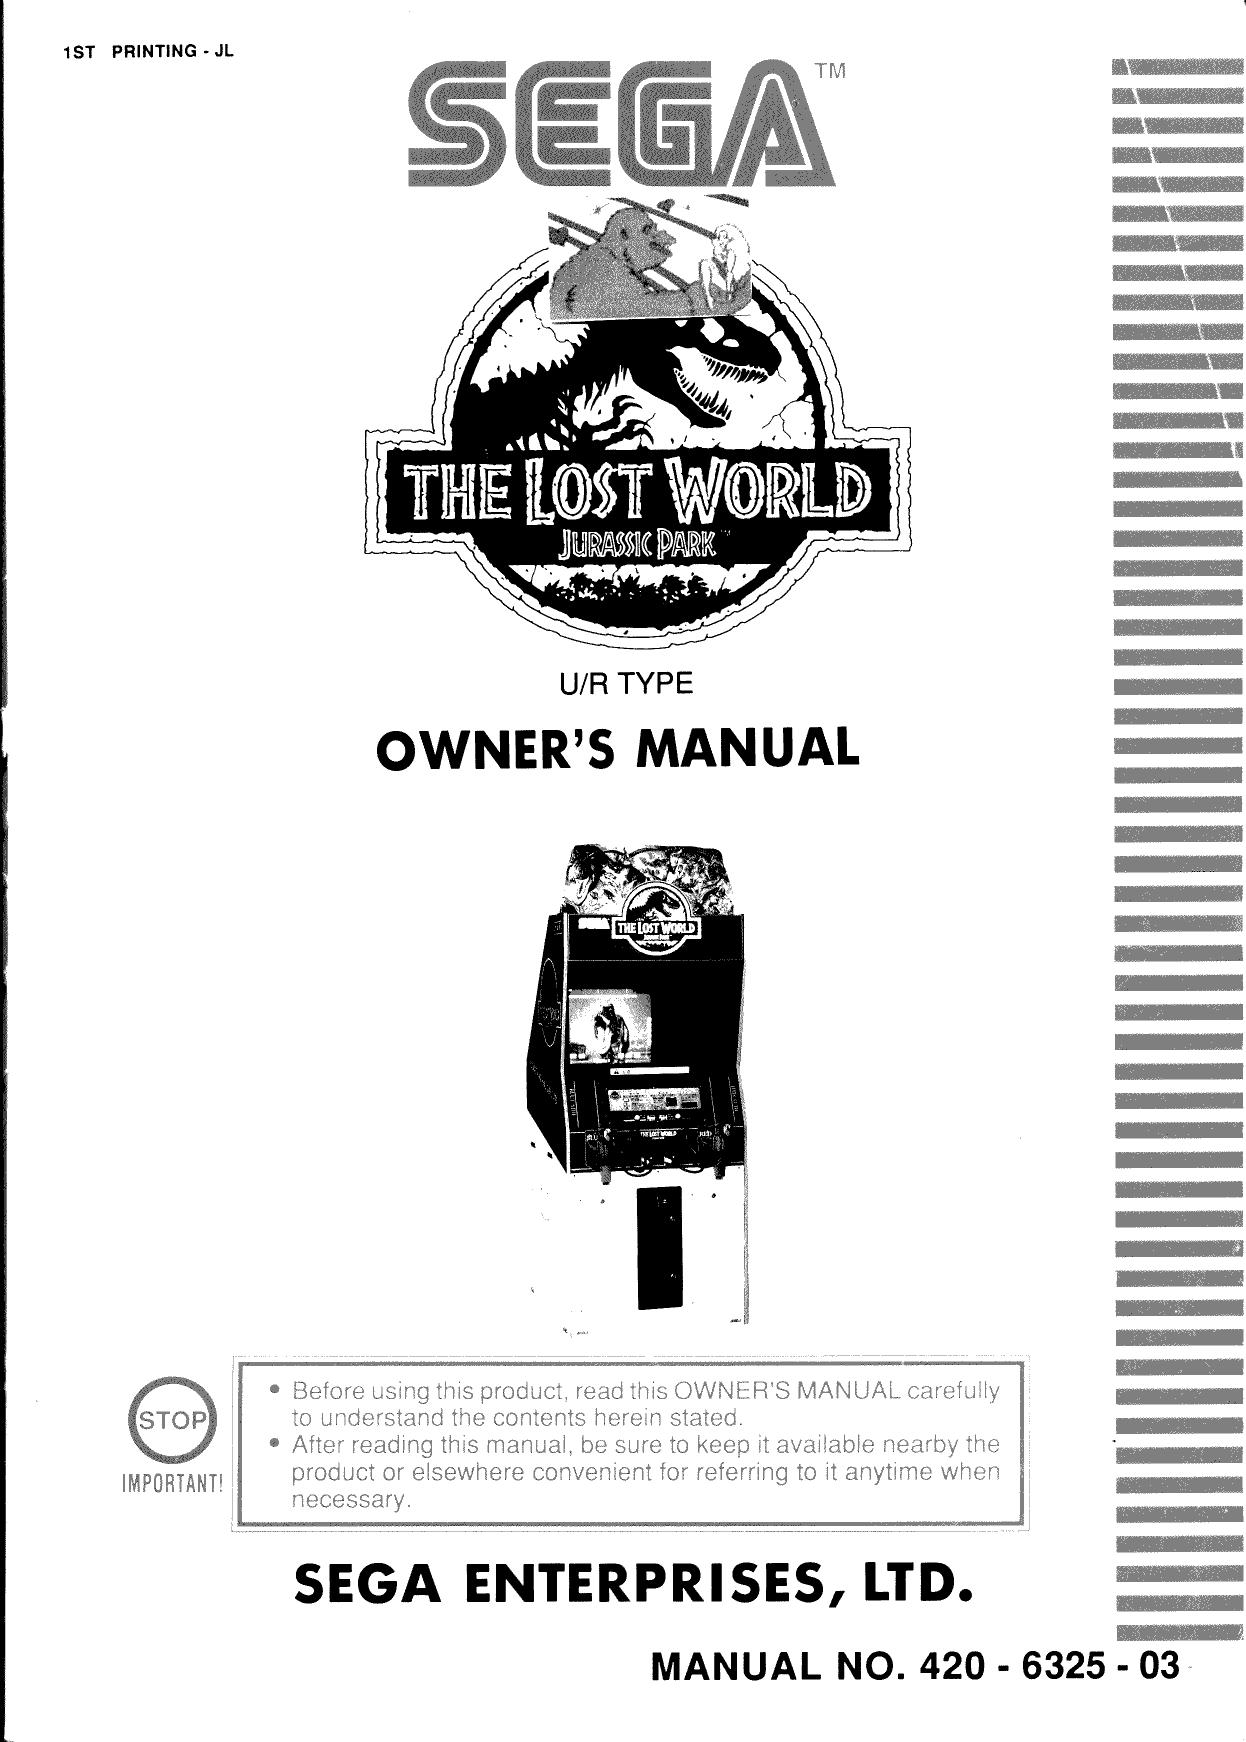 LostWorld Manual